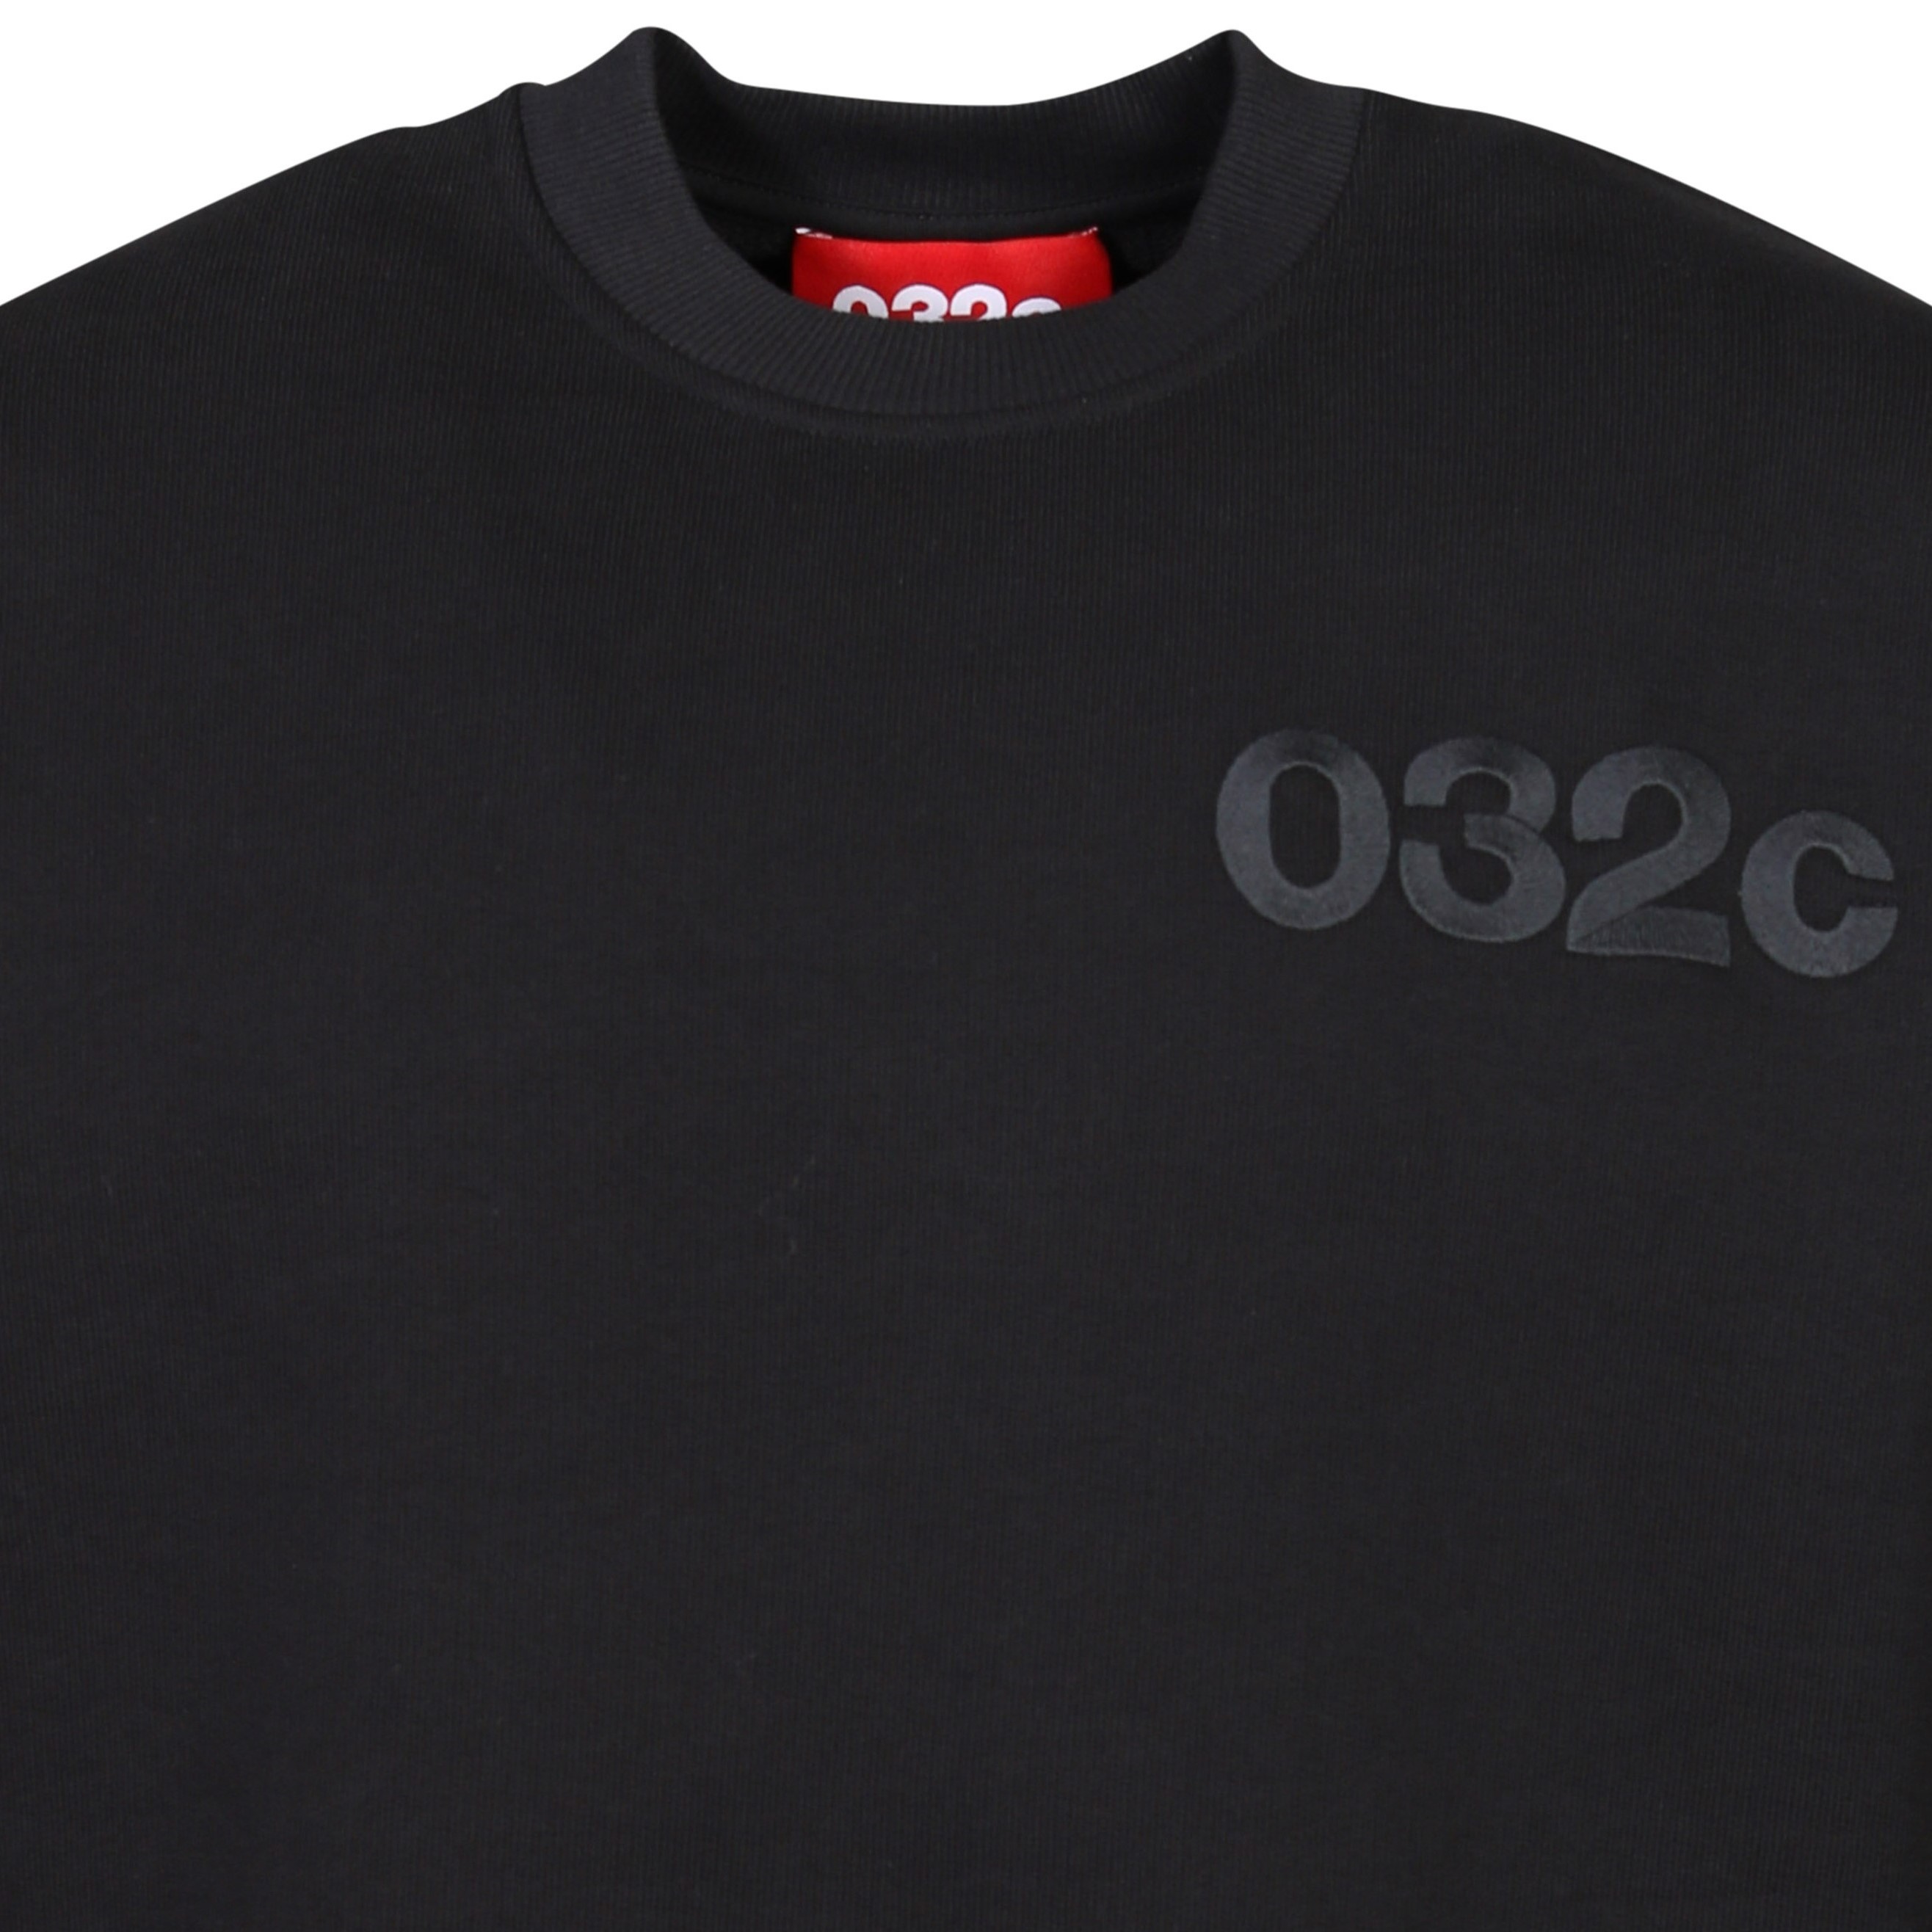 032c Oversized Crewneck Sweater in Black